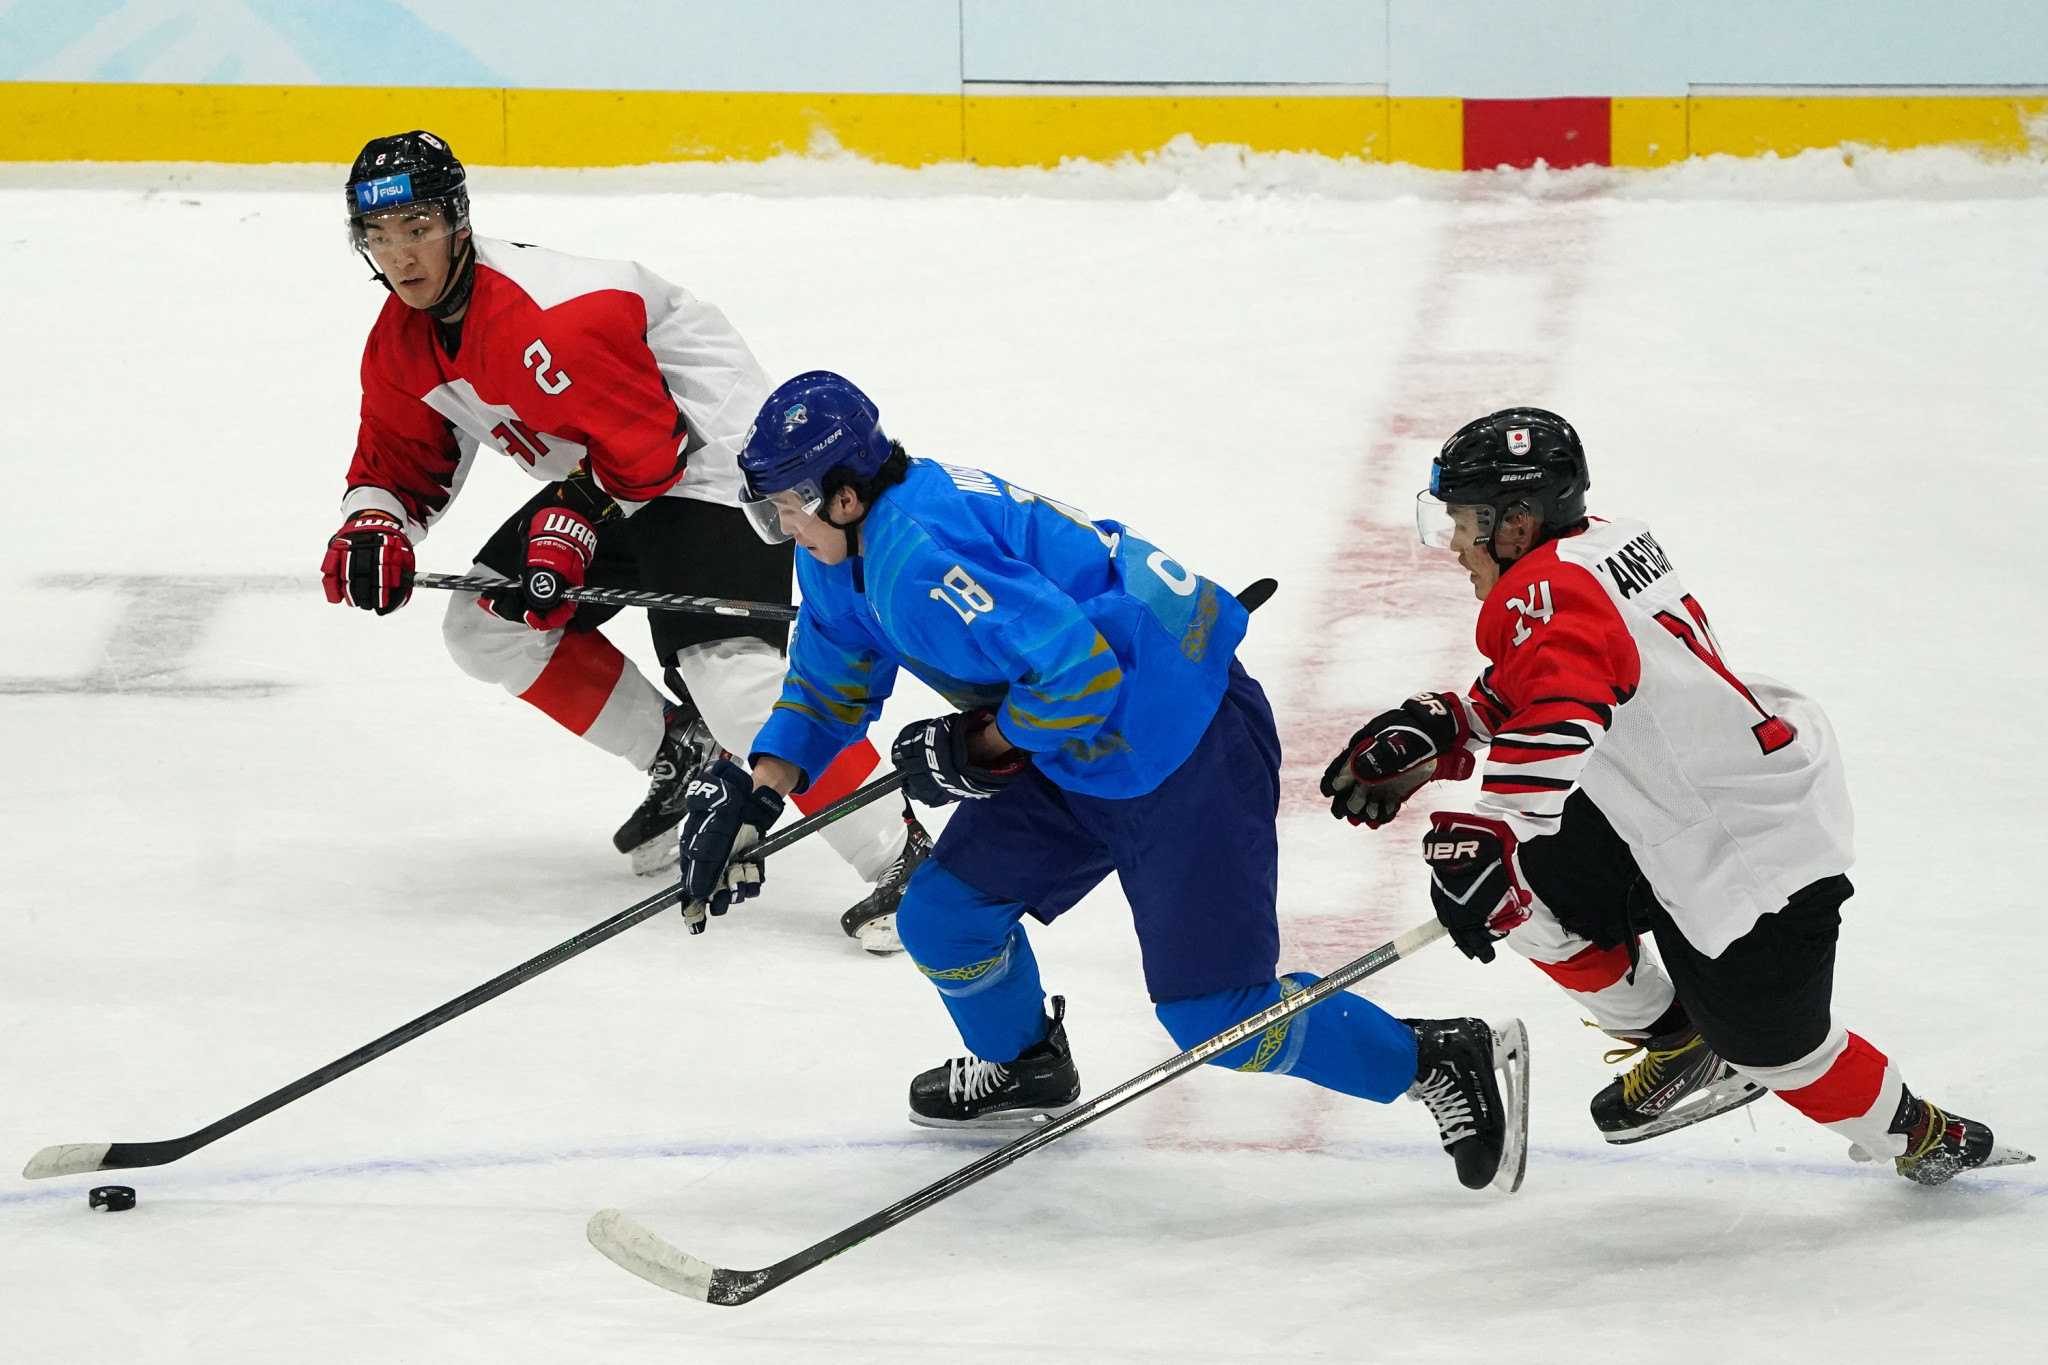 Kazakhstan won the bronze medal following an 8-1 mauling of Japan ©FISU